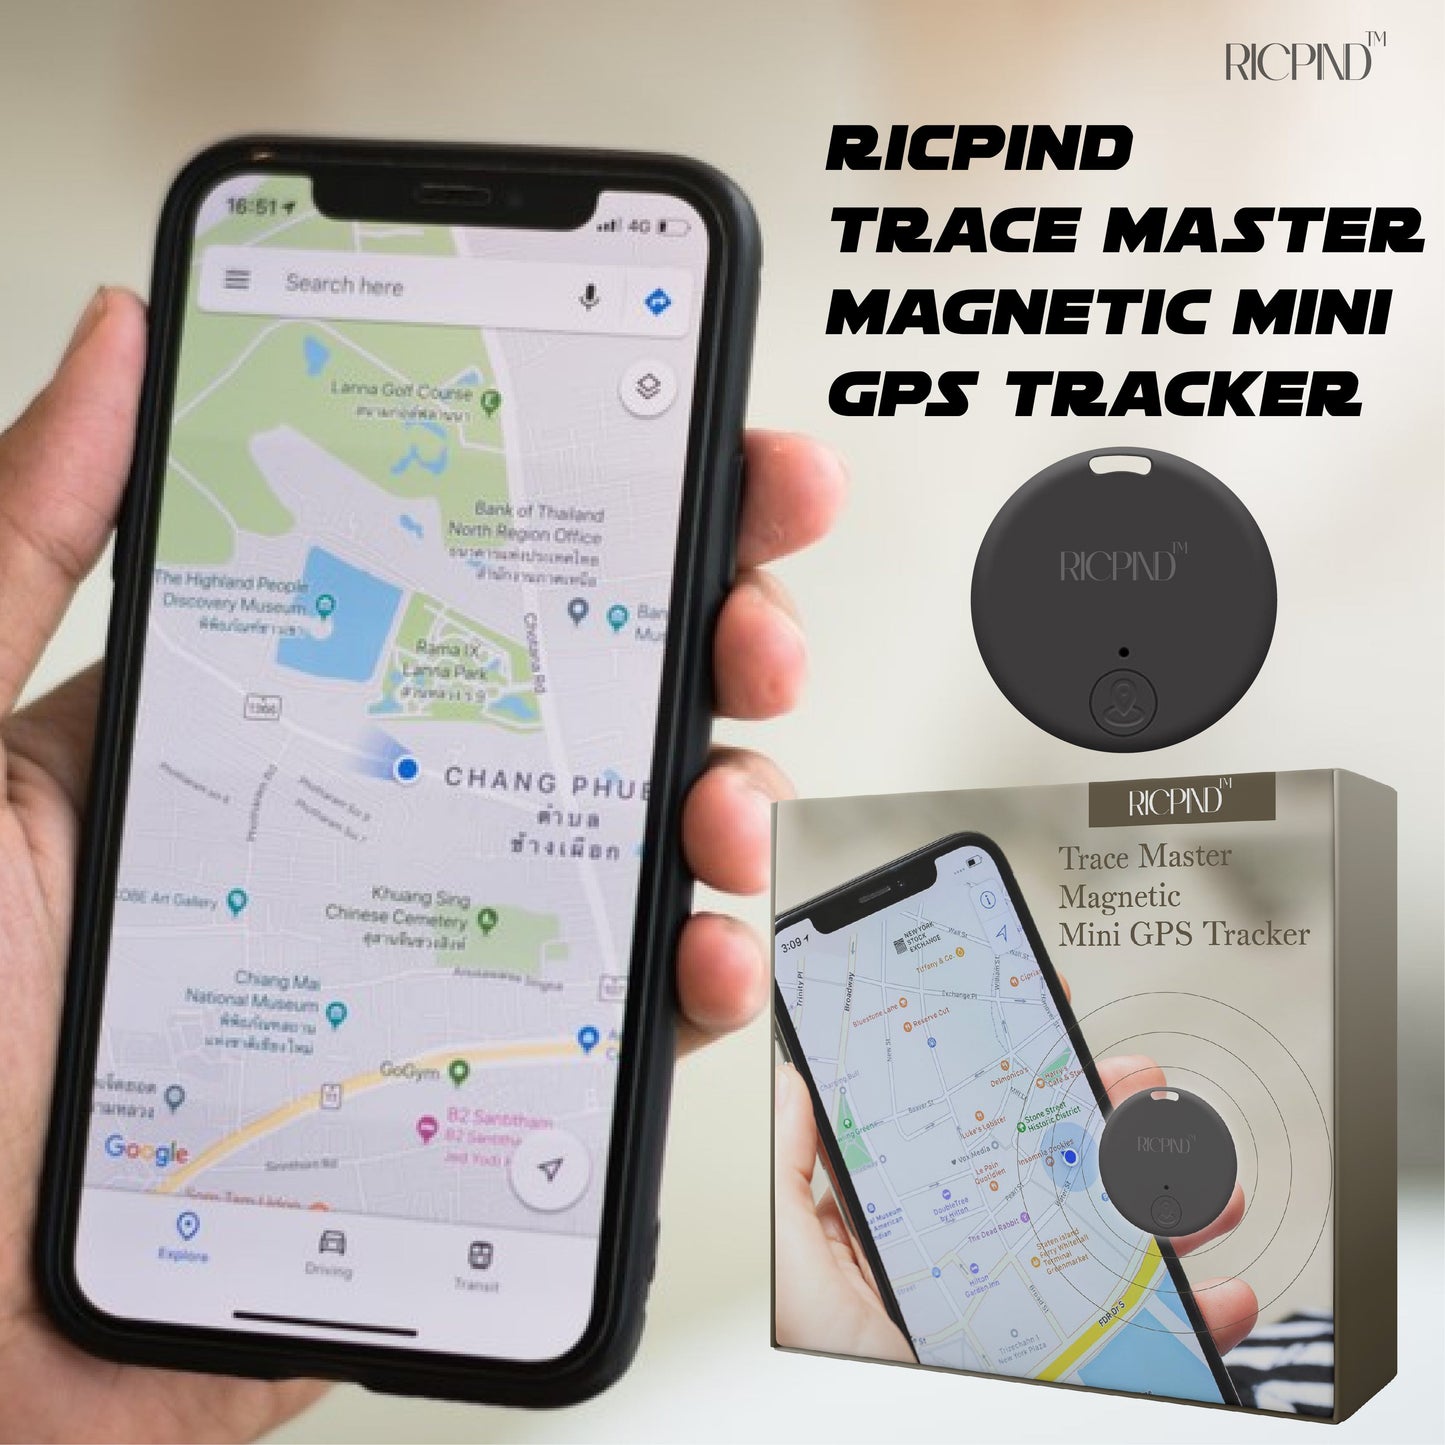 RICPIND Trace Master Magnetic Mini GPS Tracker